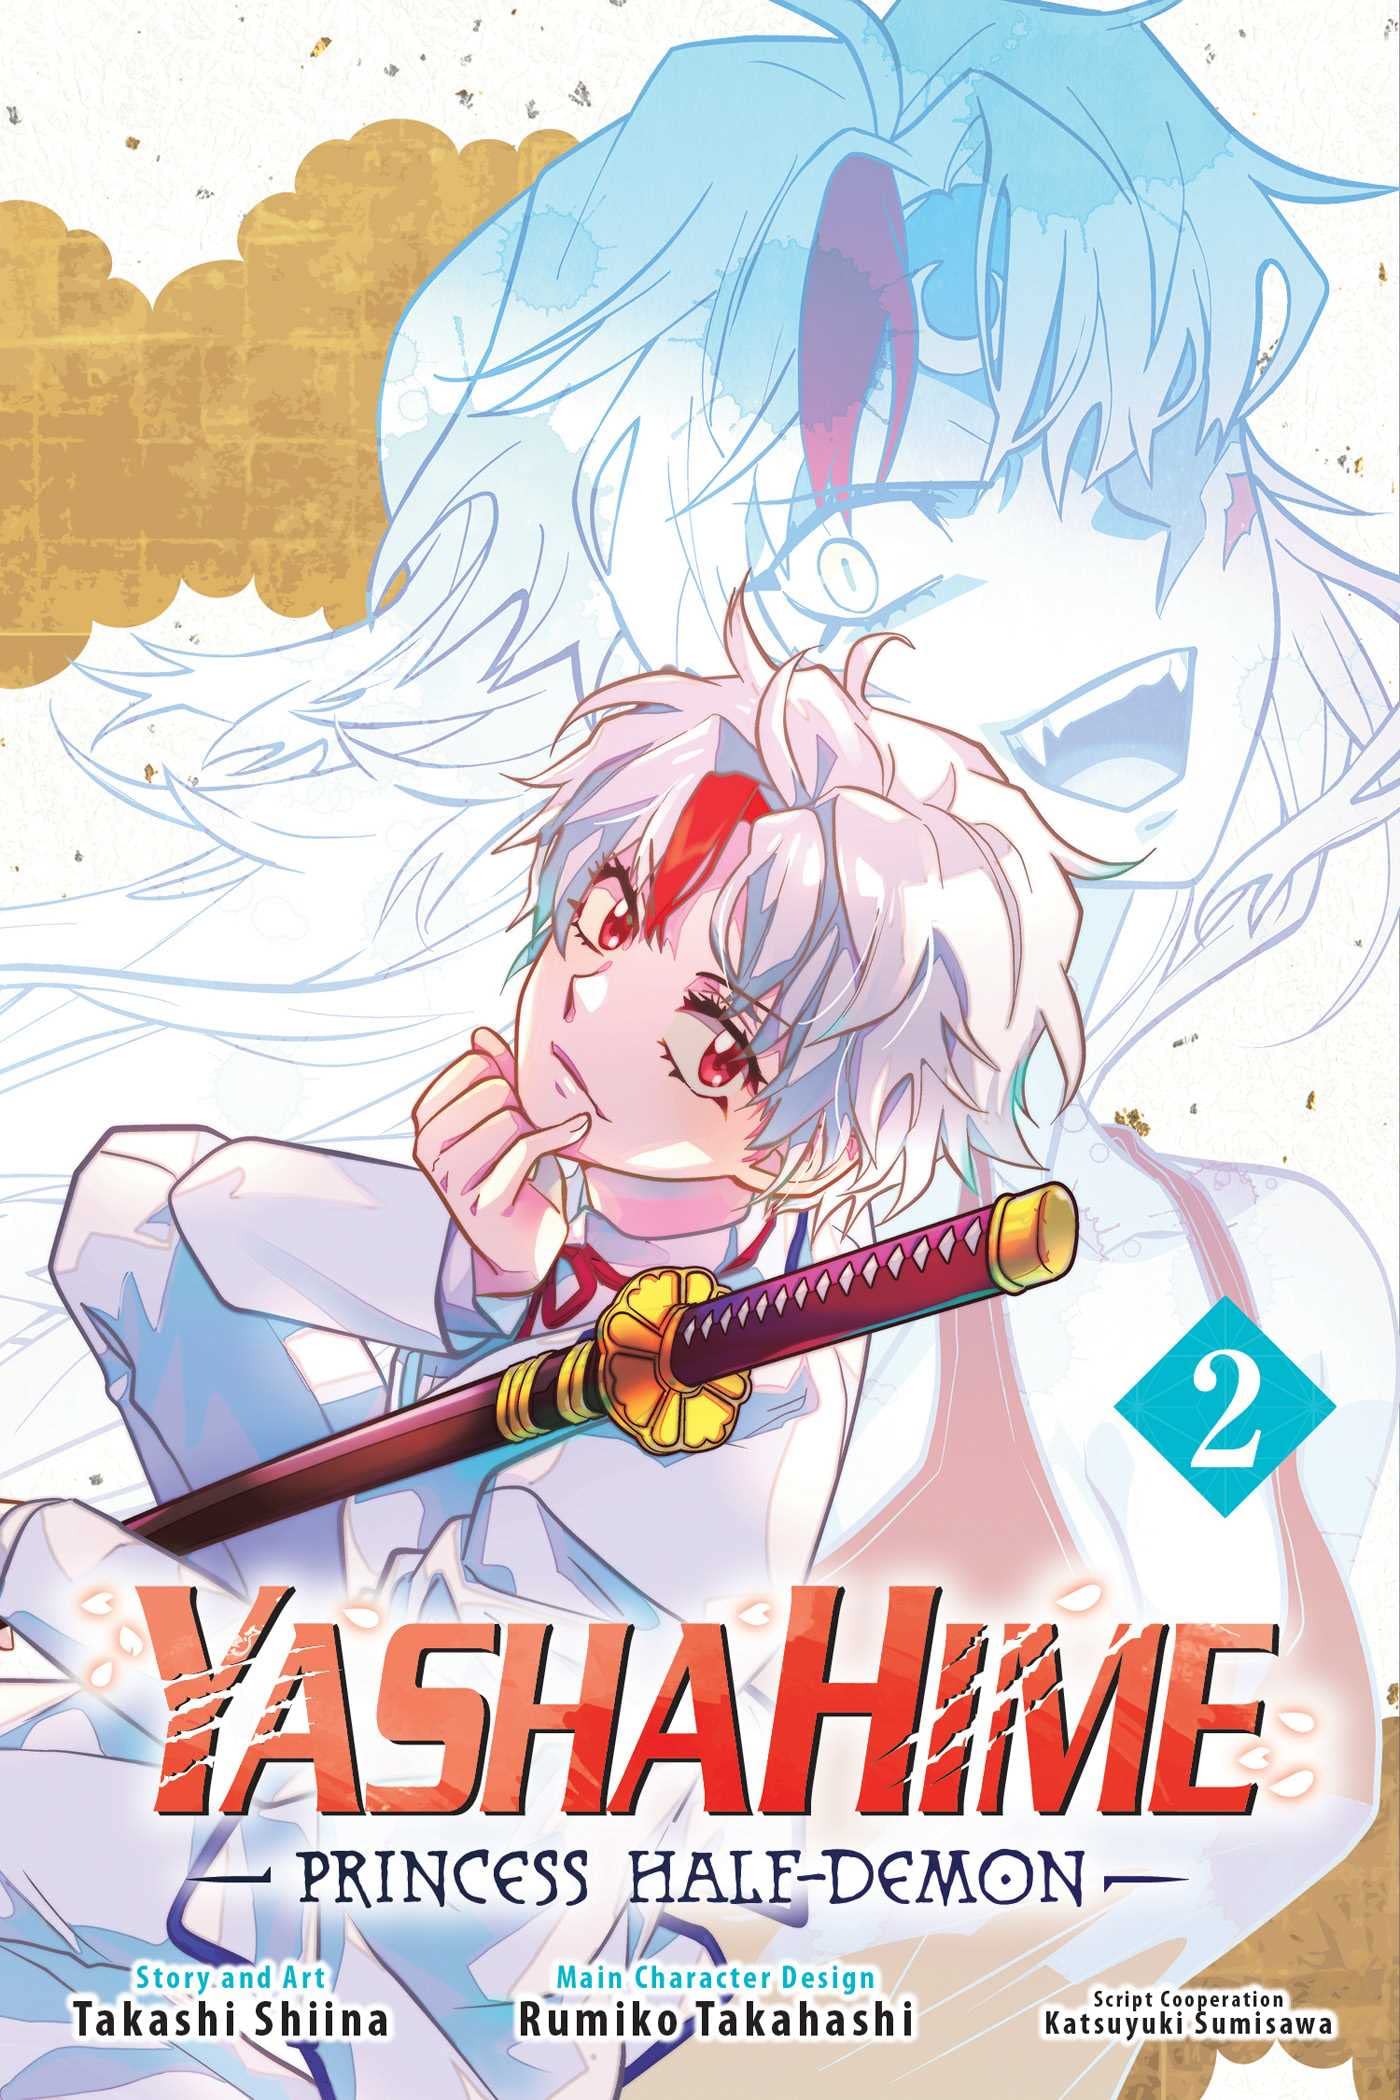 Yashahime: Princess Half-Demon Vol. 02